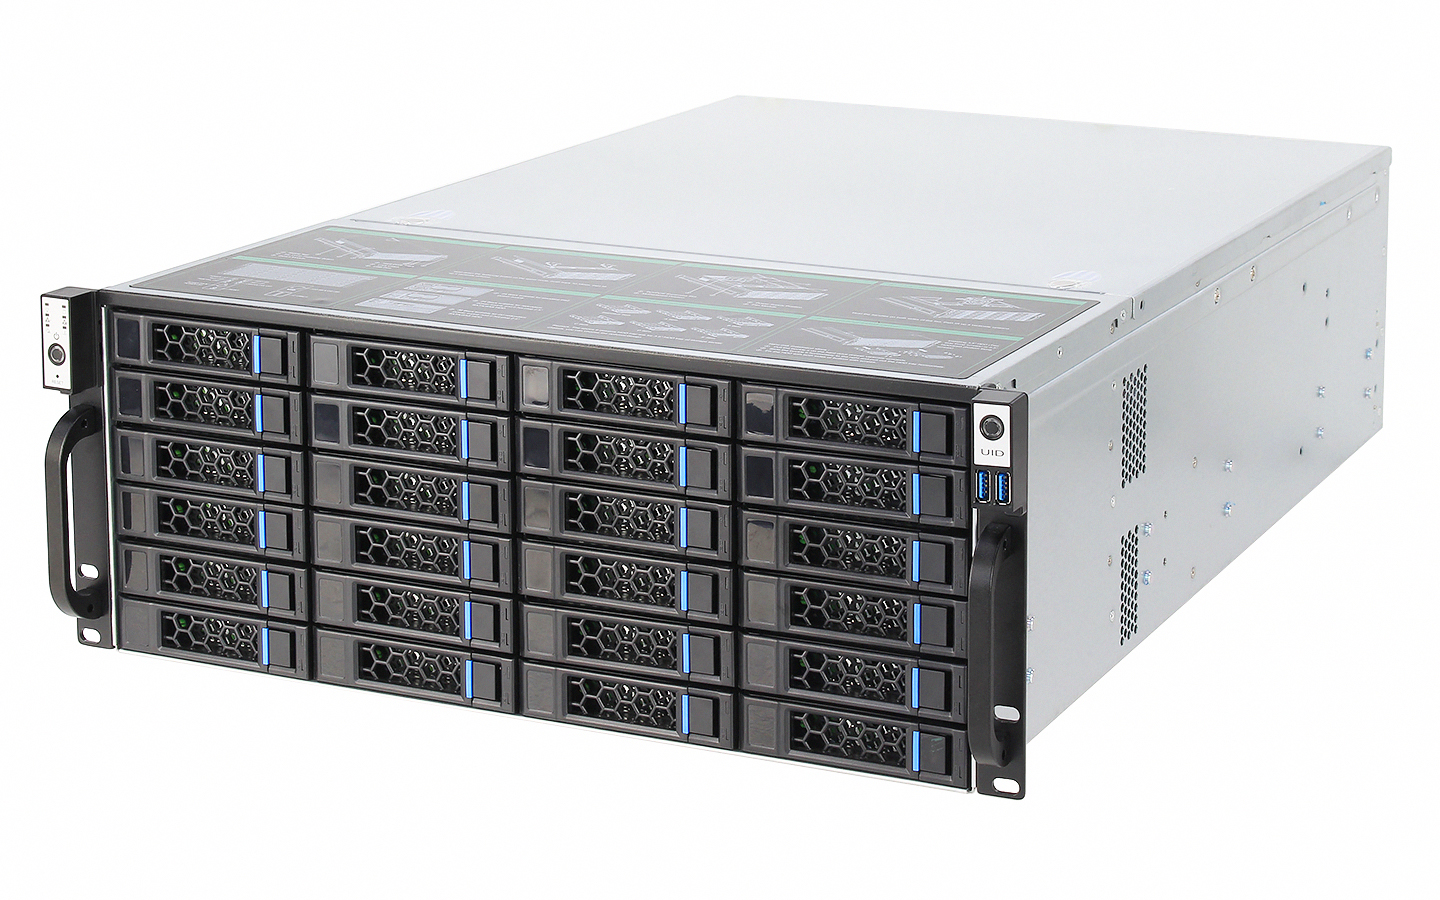 S465-24 (Distributed storage server）